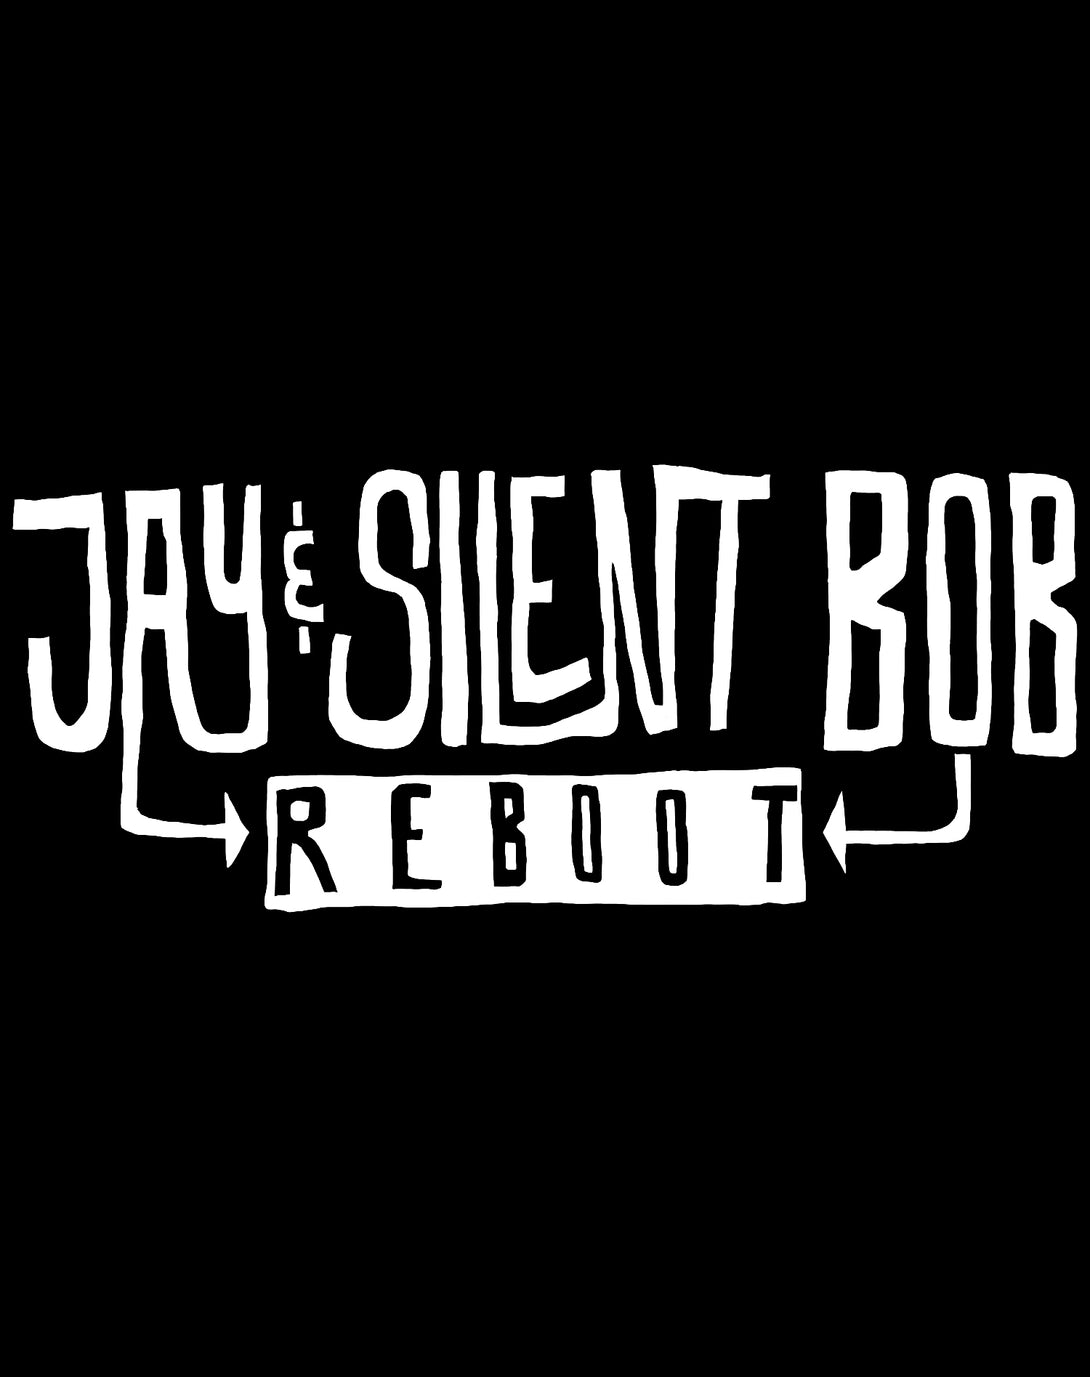 Kevin Smith Jay & Silent Bob Reboot Movie Logo Official Women's T-Shirt Black - Urban Species Design Close Up